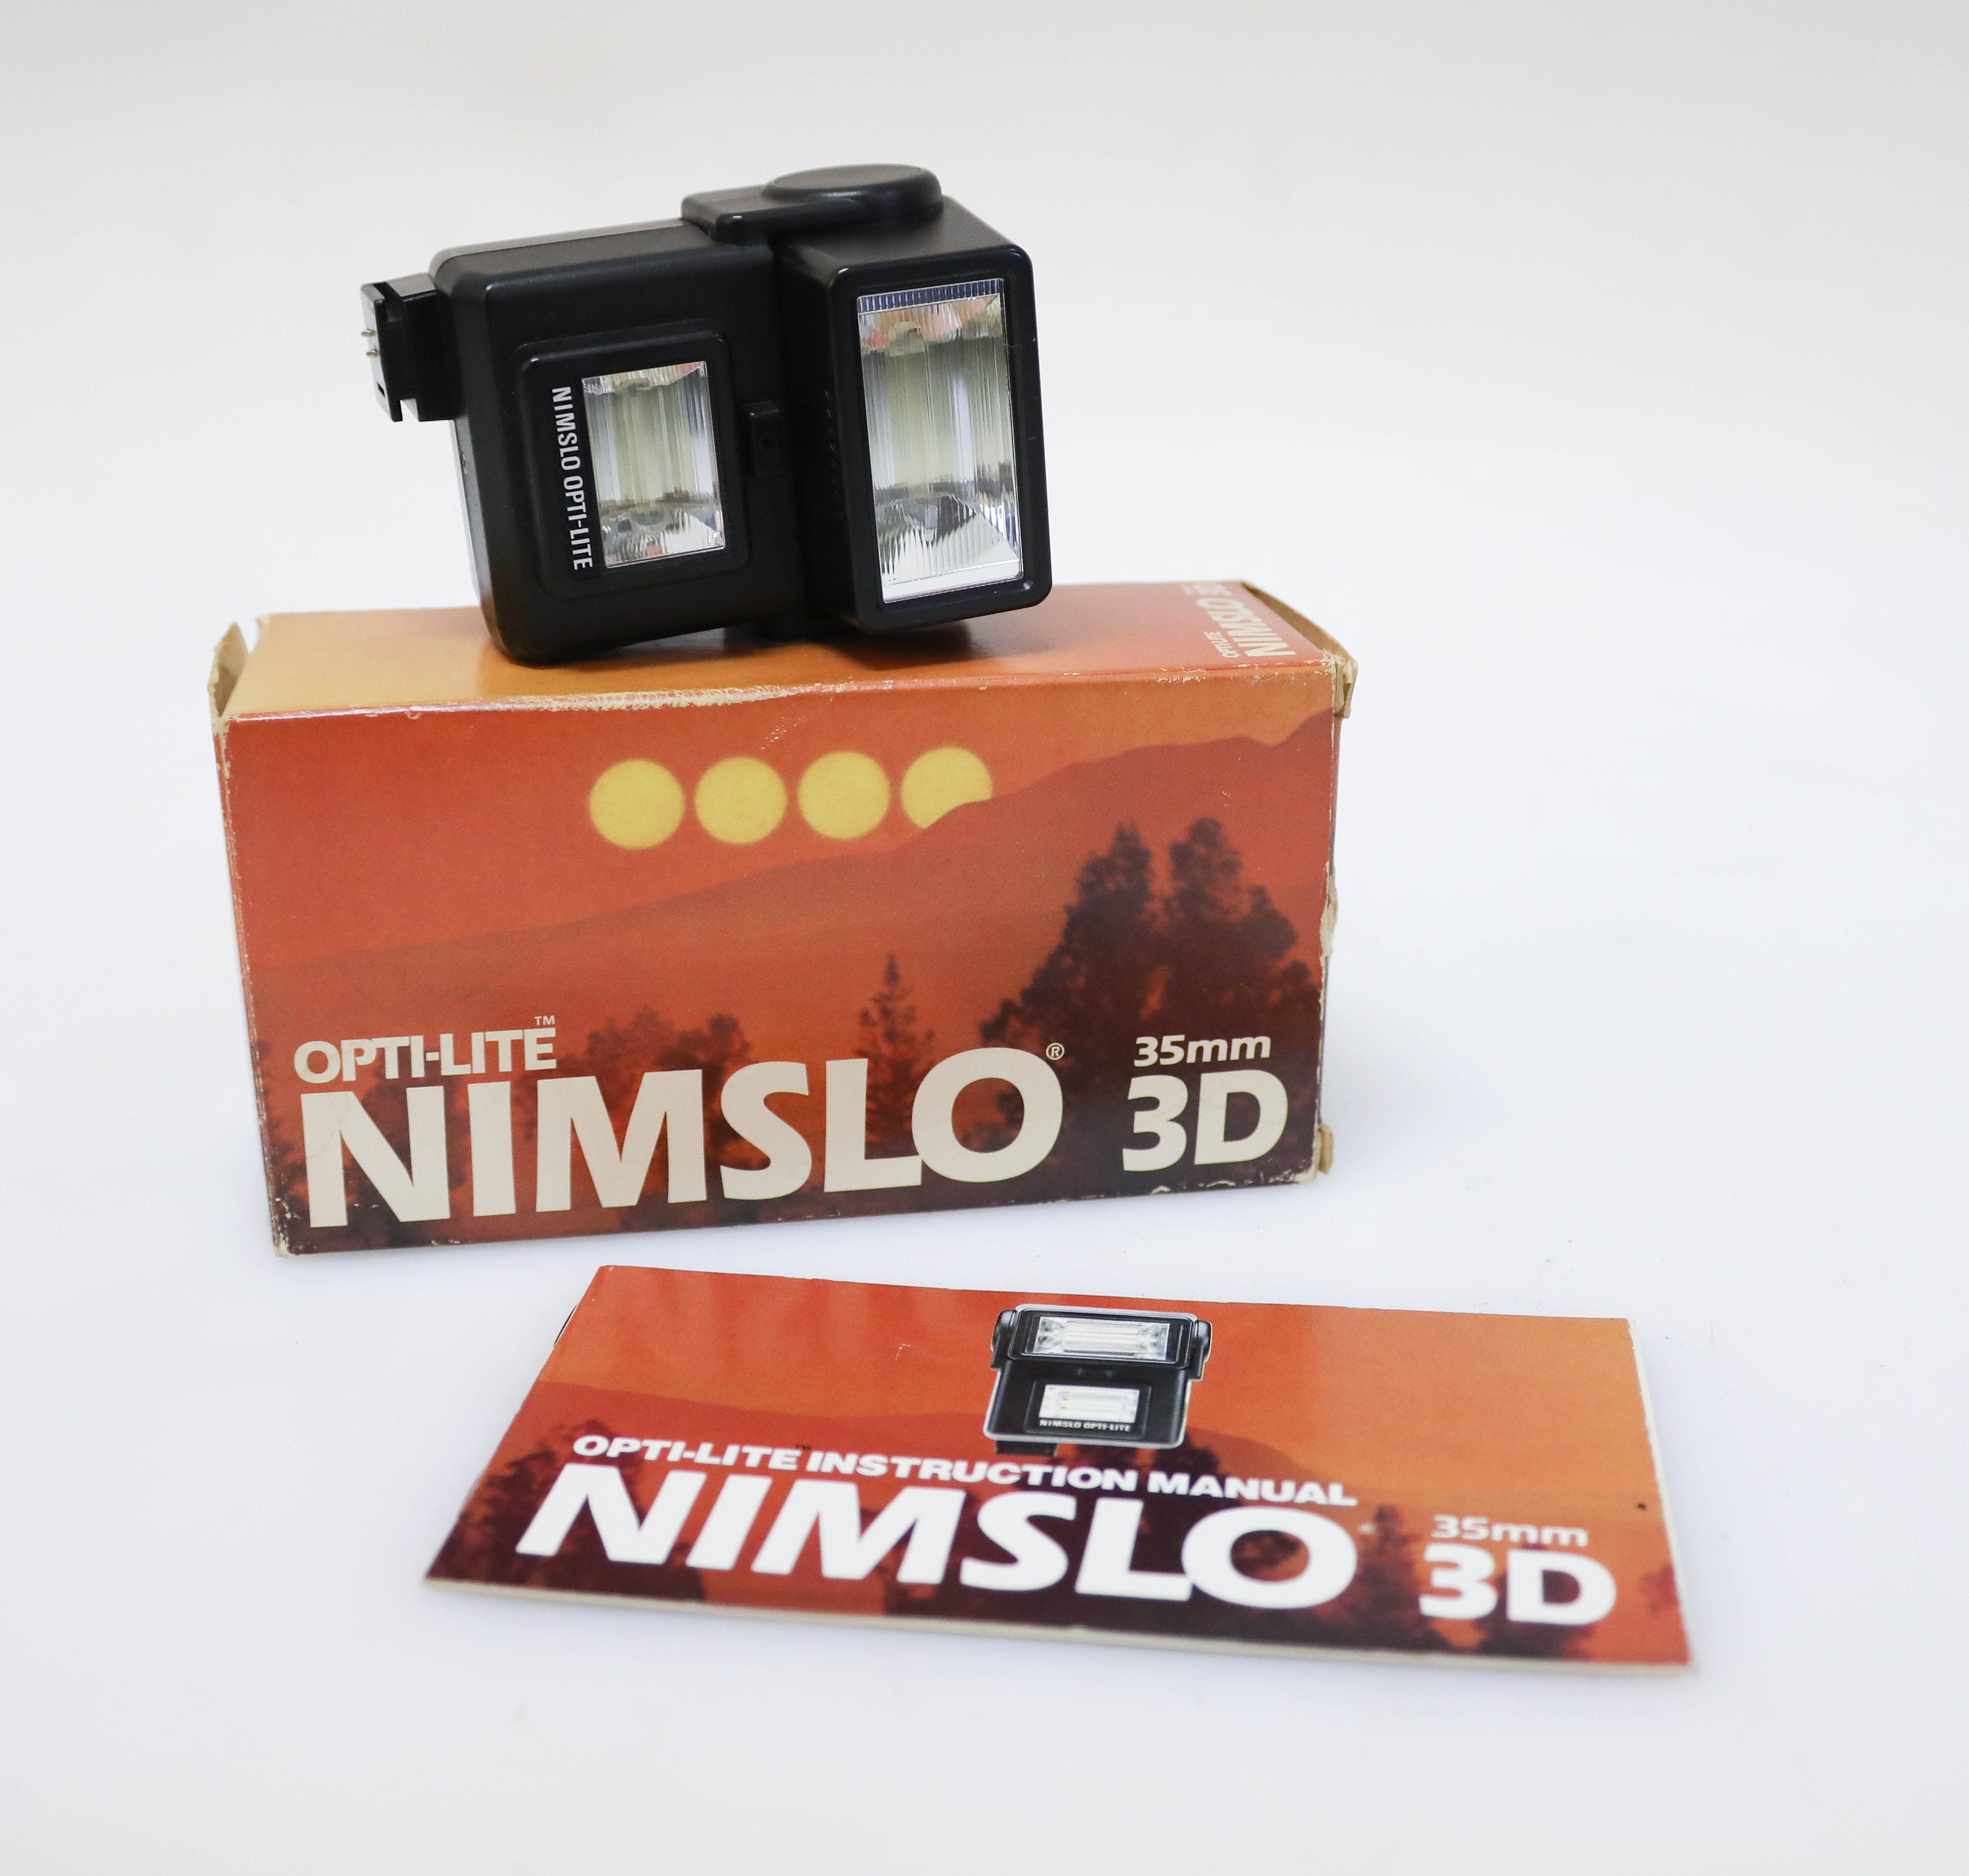 NIMSLO 3D 35mm OPTI-LITE